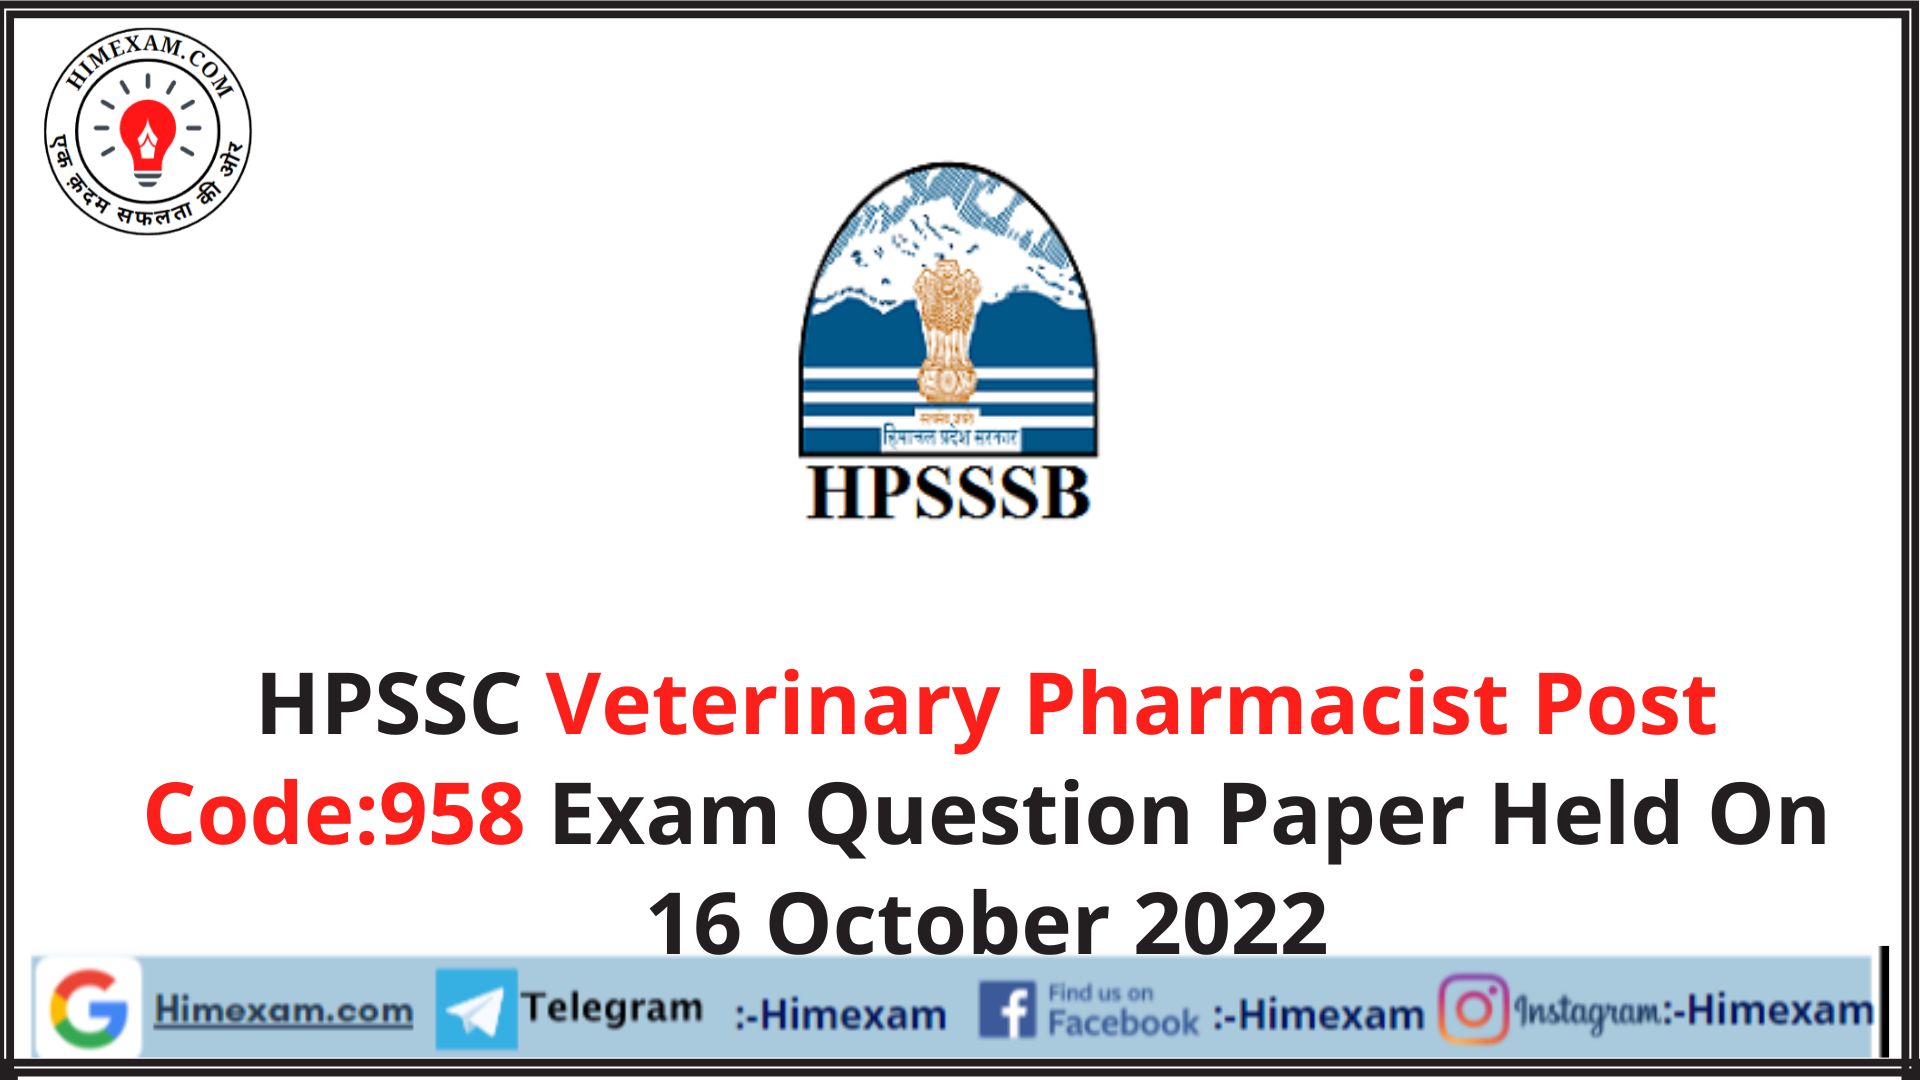 HPSSC Veterinary Pharmacist Post Code:958 Exam Question Paper Held On 16 October 2022